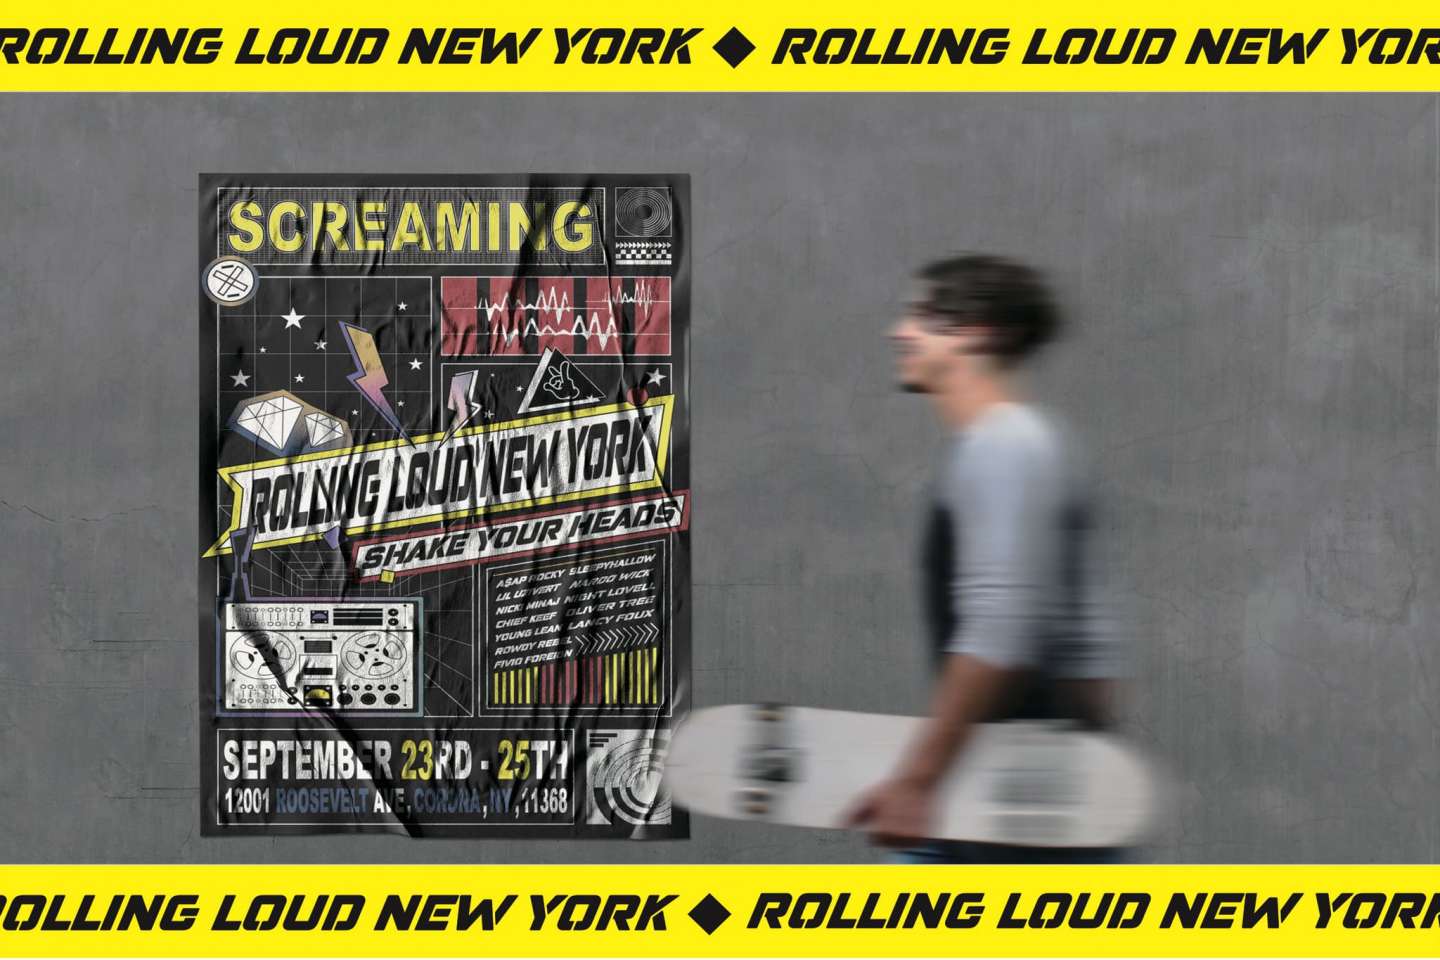 Rolling Loud New York